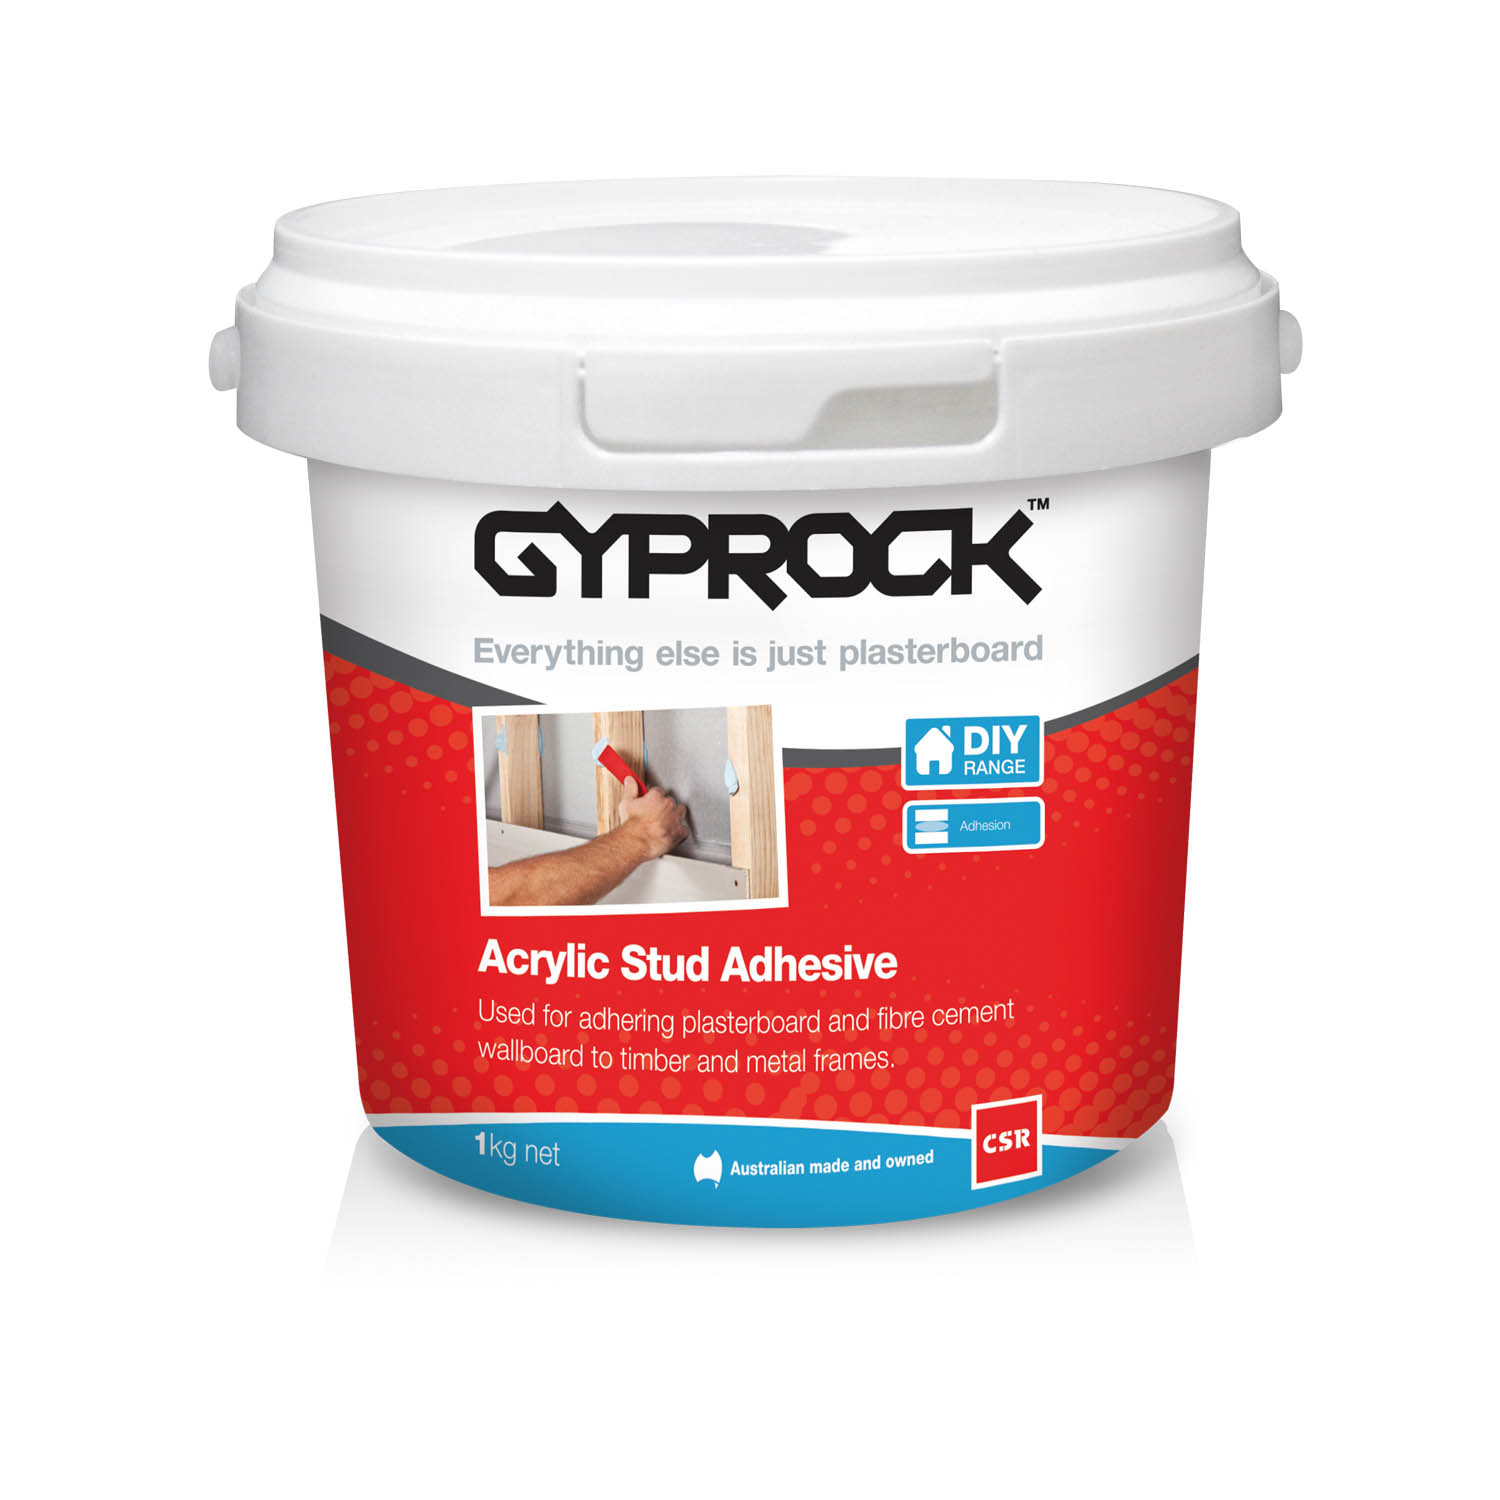 Gyprock® Acrylic Stud Adhesive (DIY)